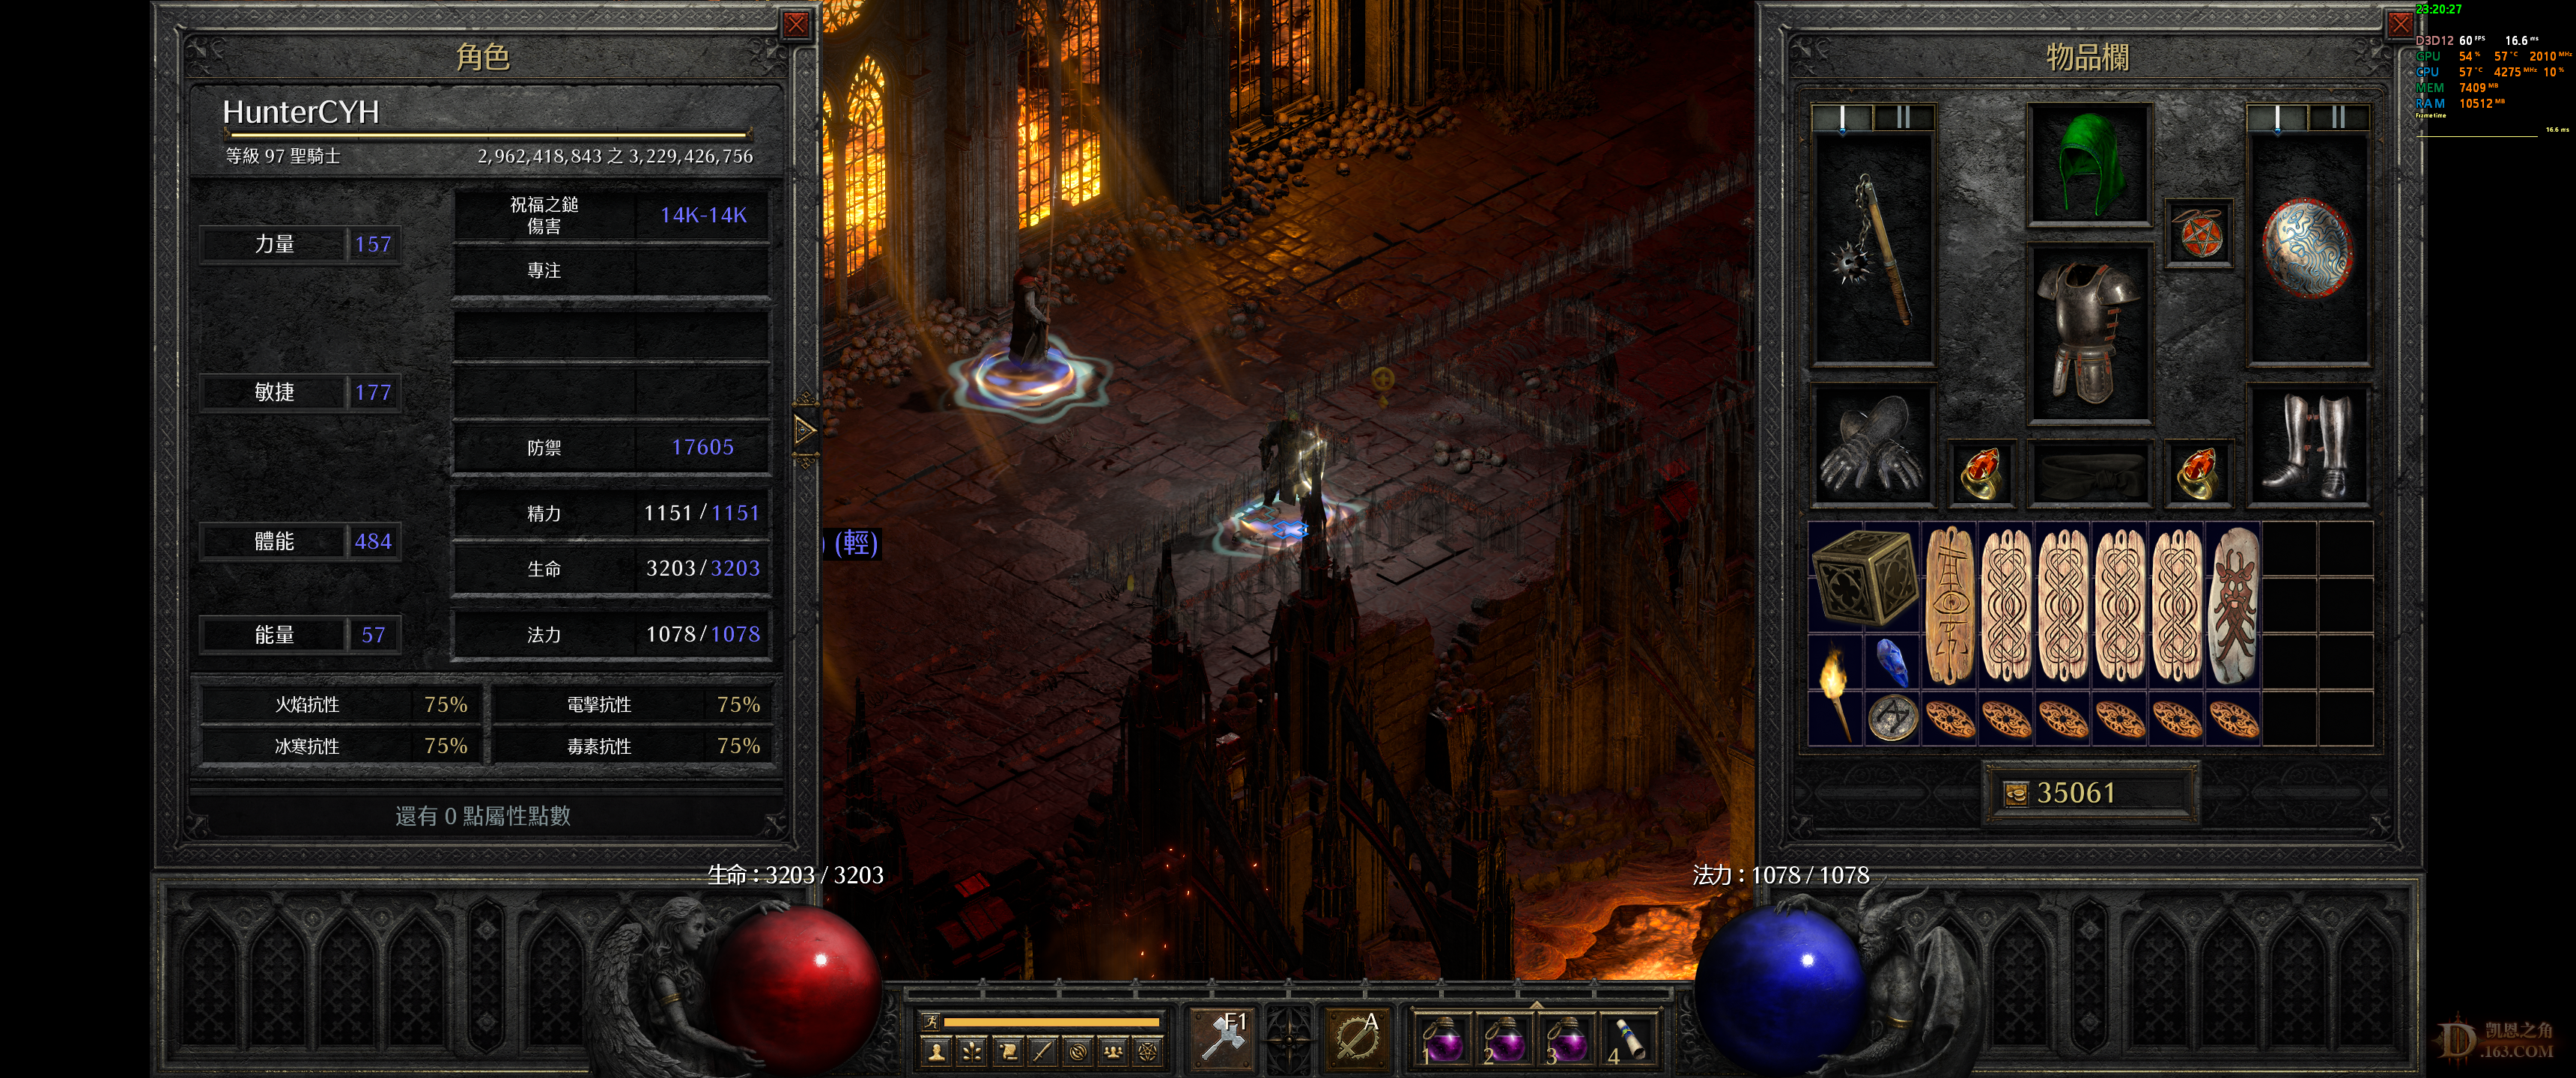 Diablo 2 Resurrected Screenshot 2022.04.10 - 23.20.27.79.png